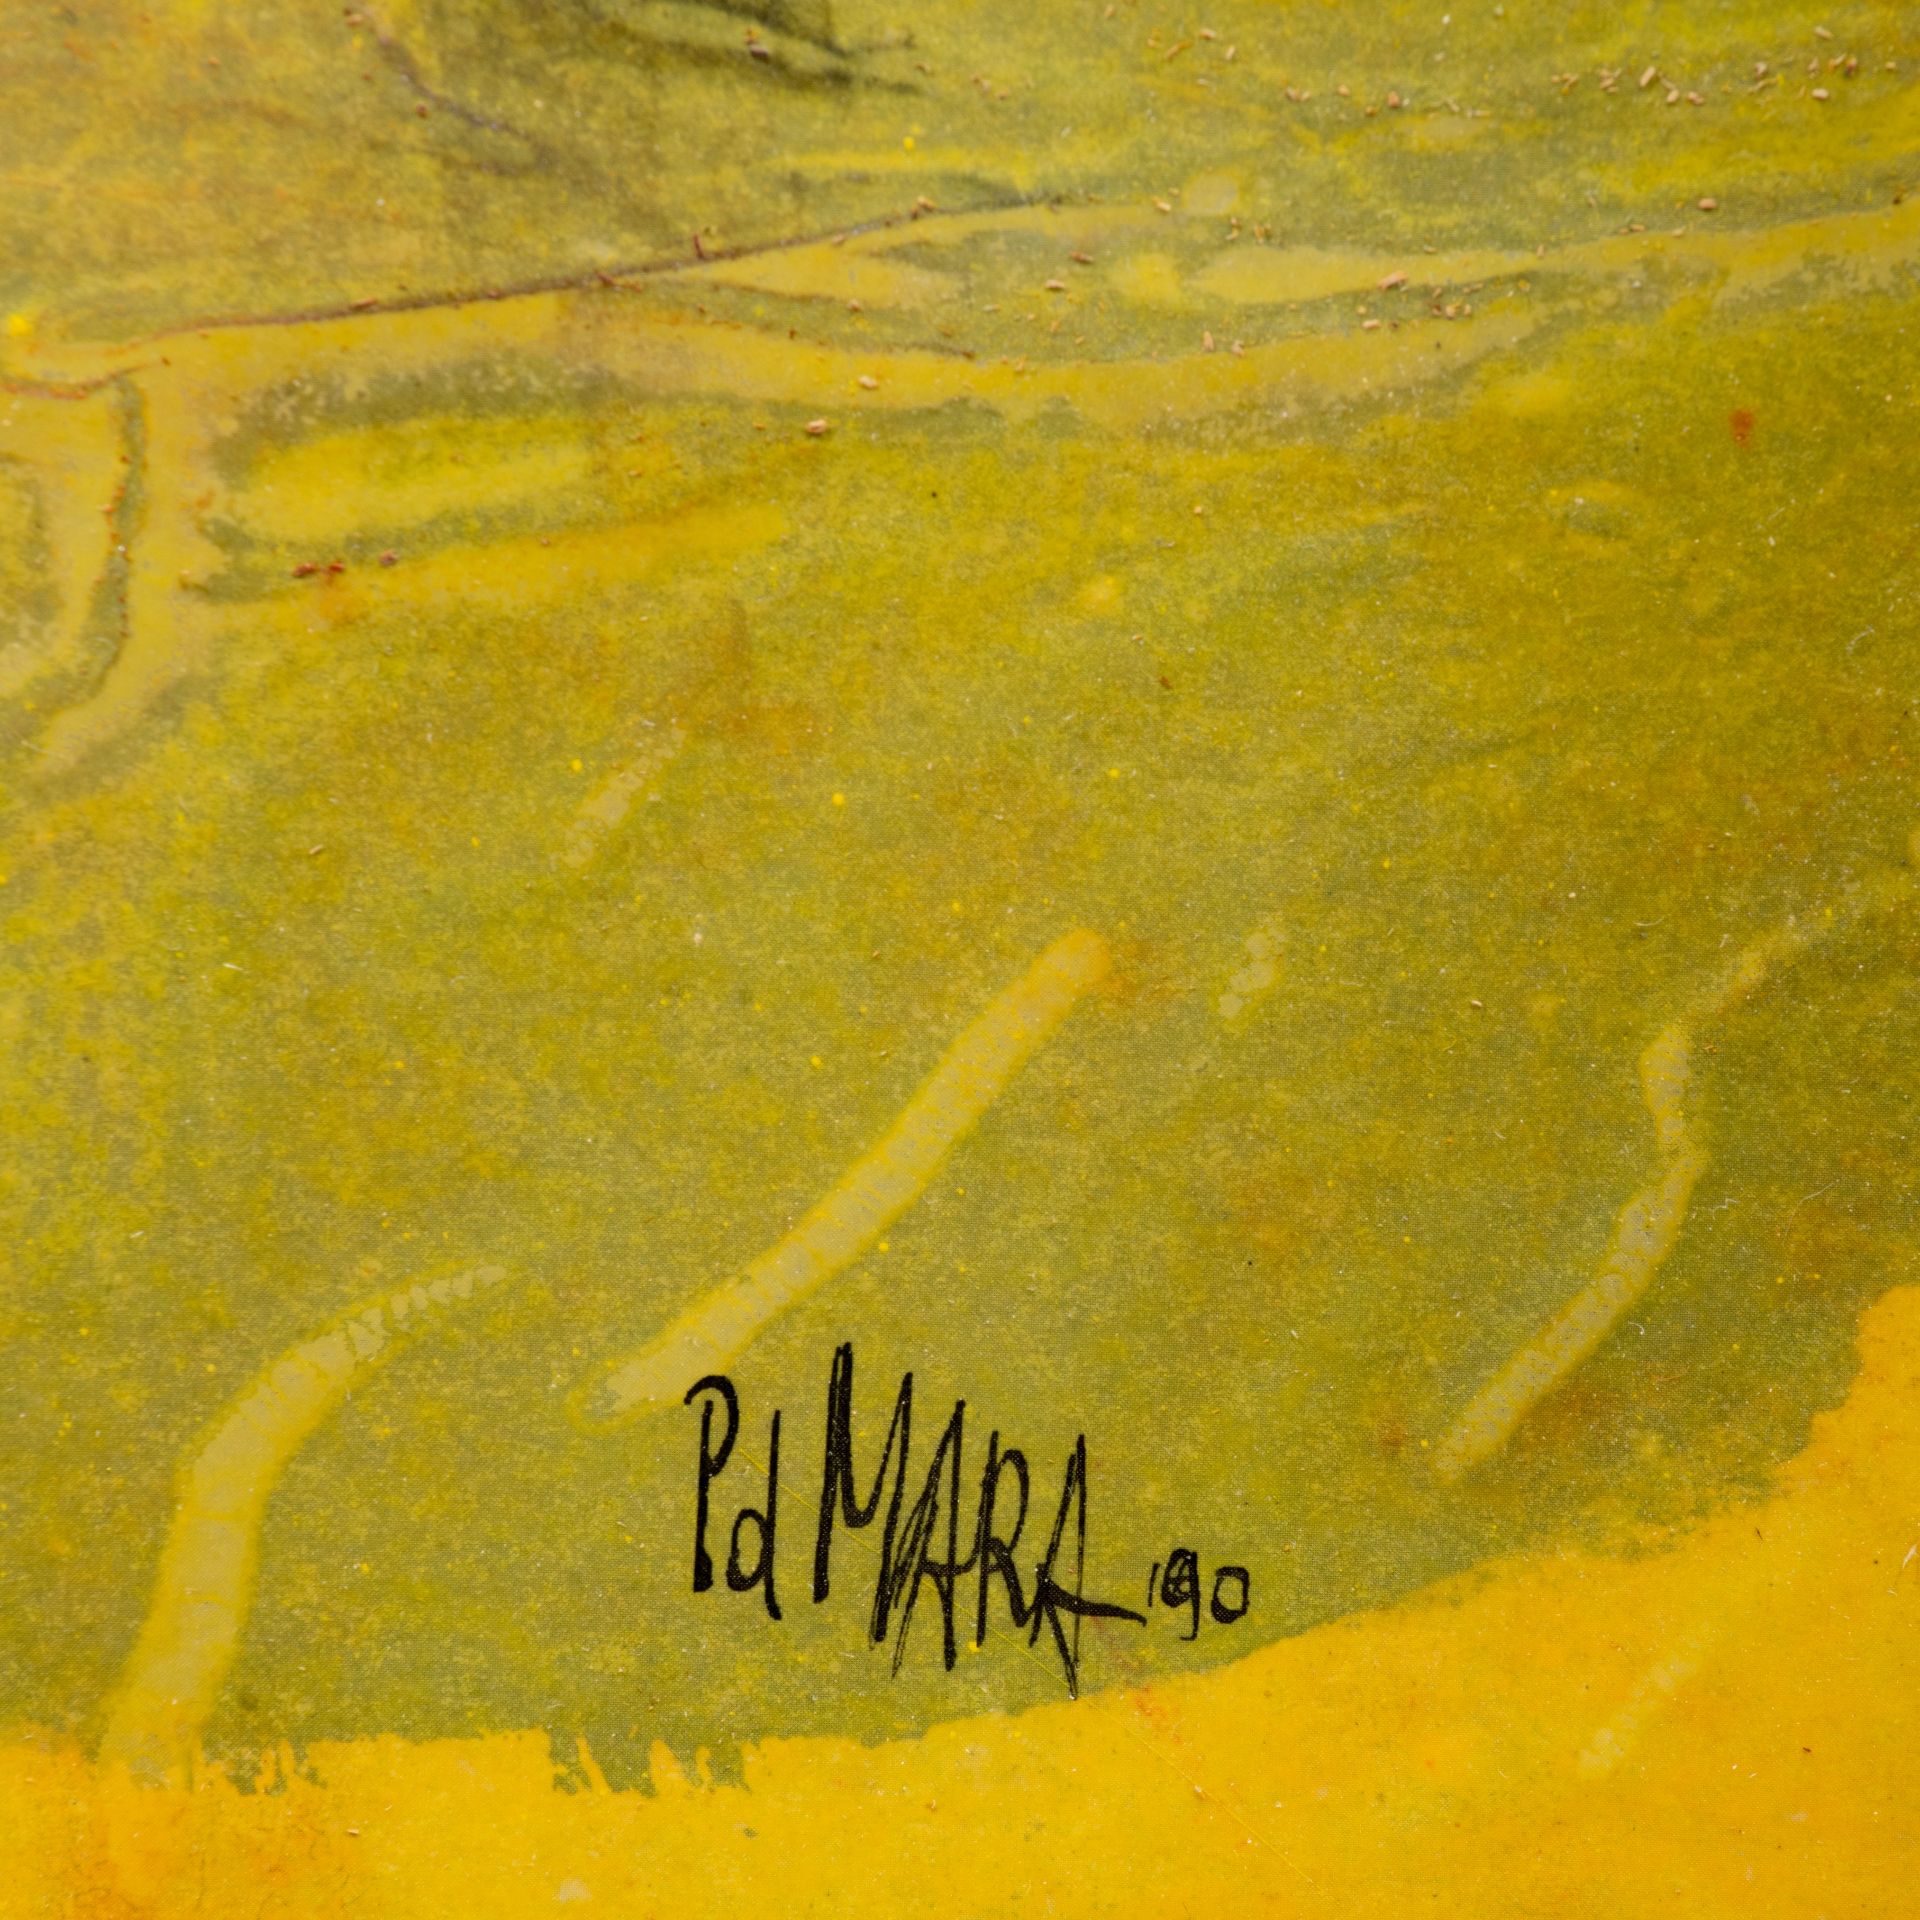 Pol Mara (1990-1998), 'Rouleaux photo', watercolour and mixed media on paper, 1990, 100 x 70 cm - Bild 4 aus 6